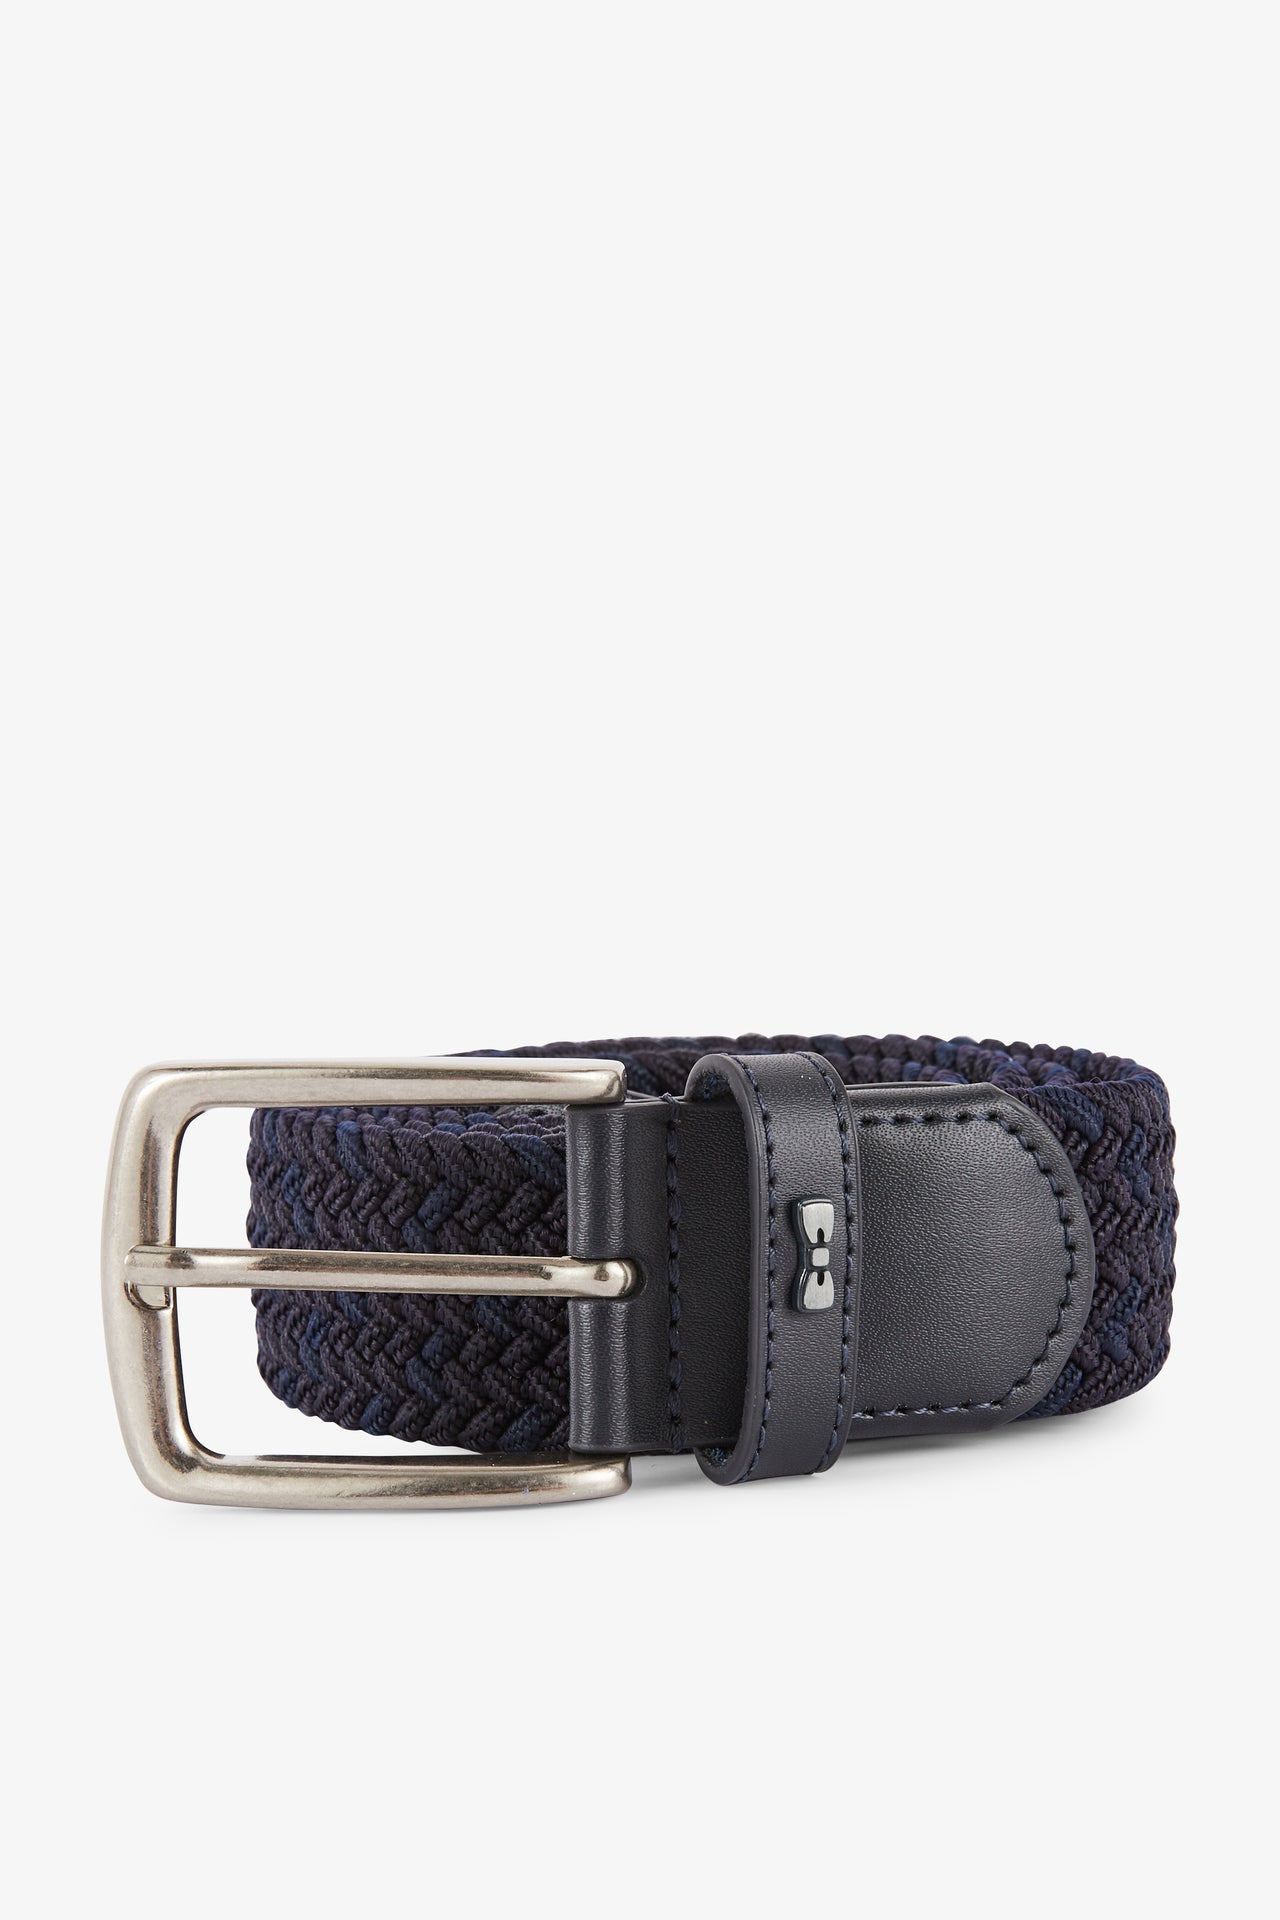 Navy blue braided belt - Image 1